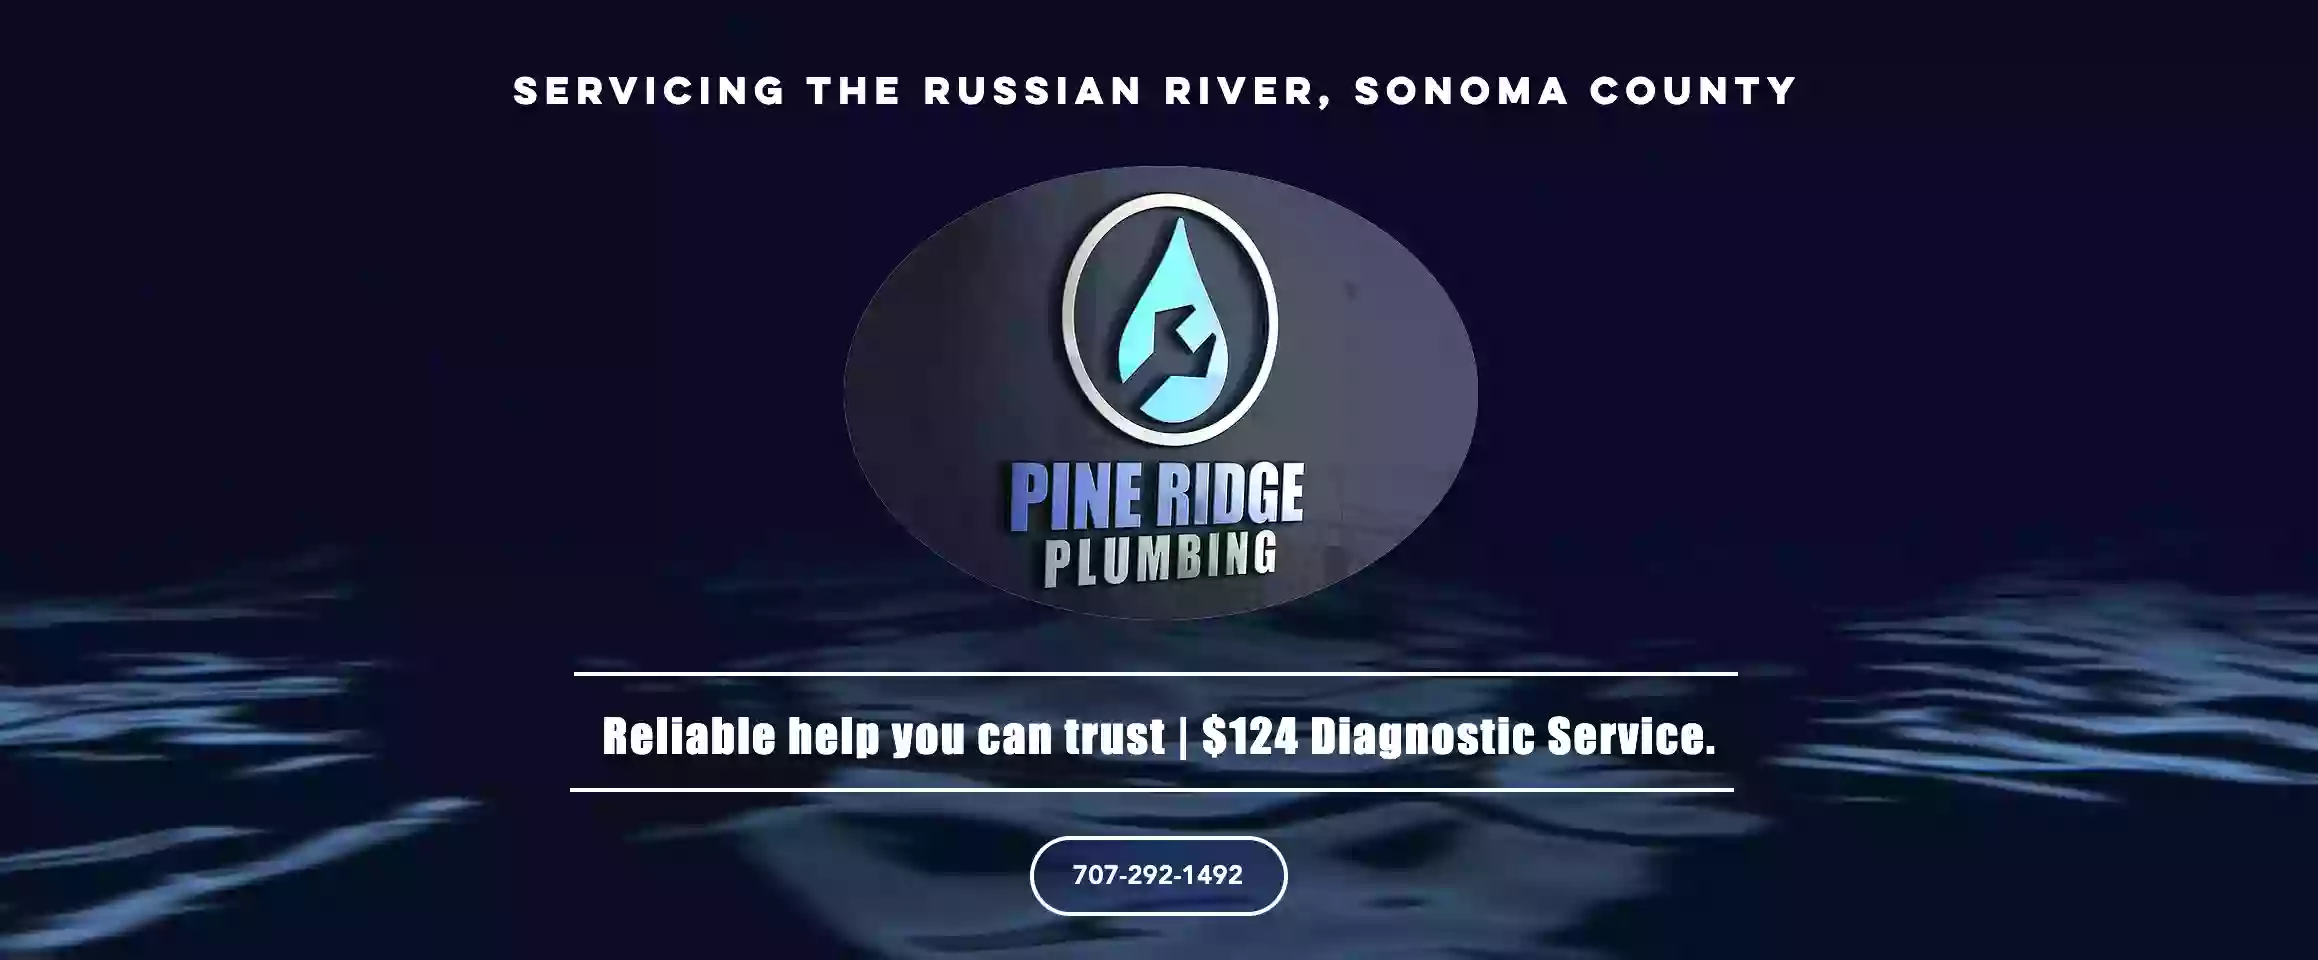 Pine Ridge Plumbing